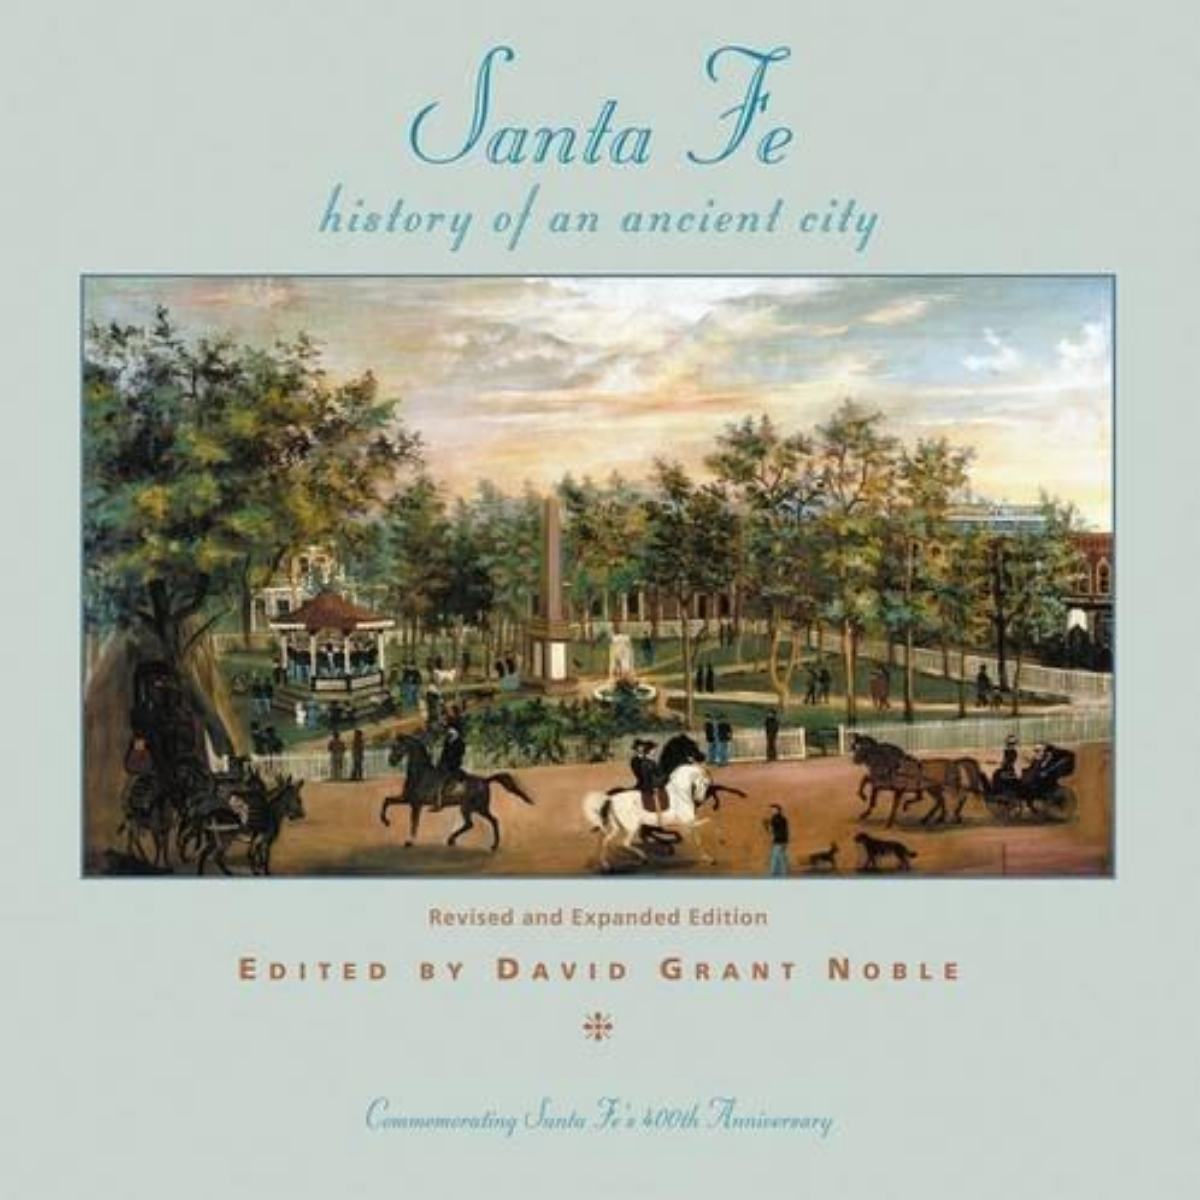 Santa Fe: History of an Ancient City